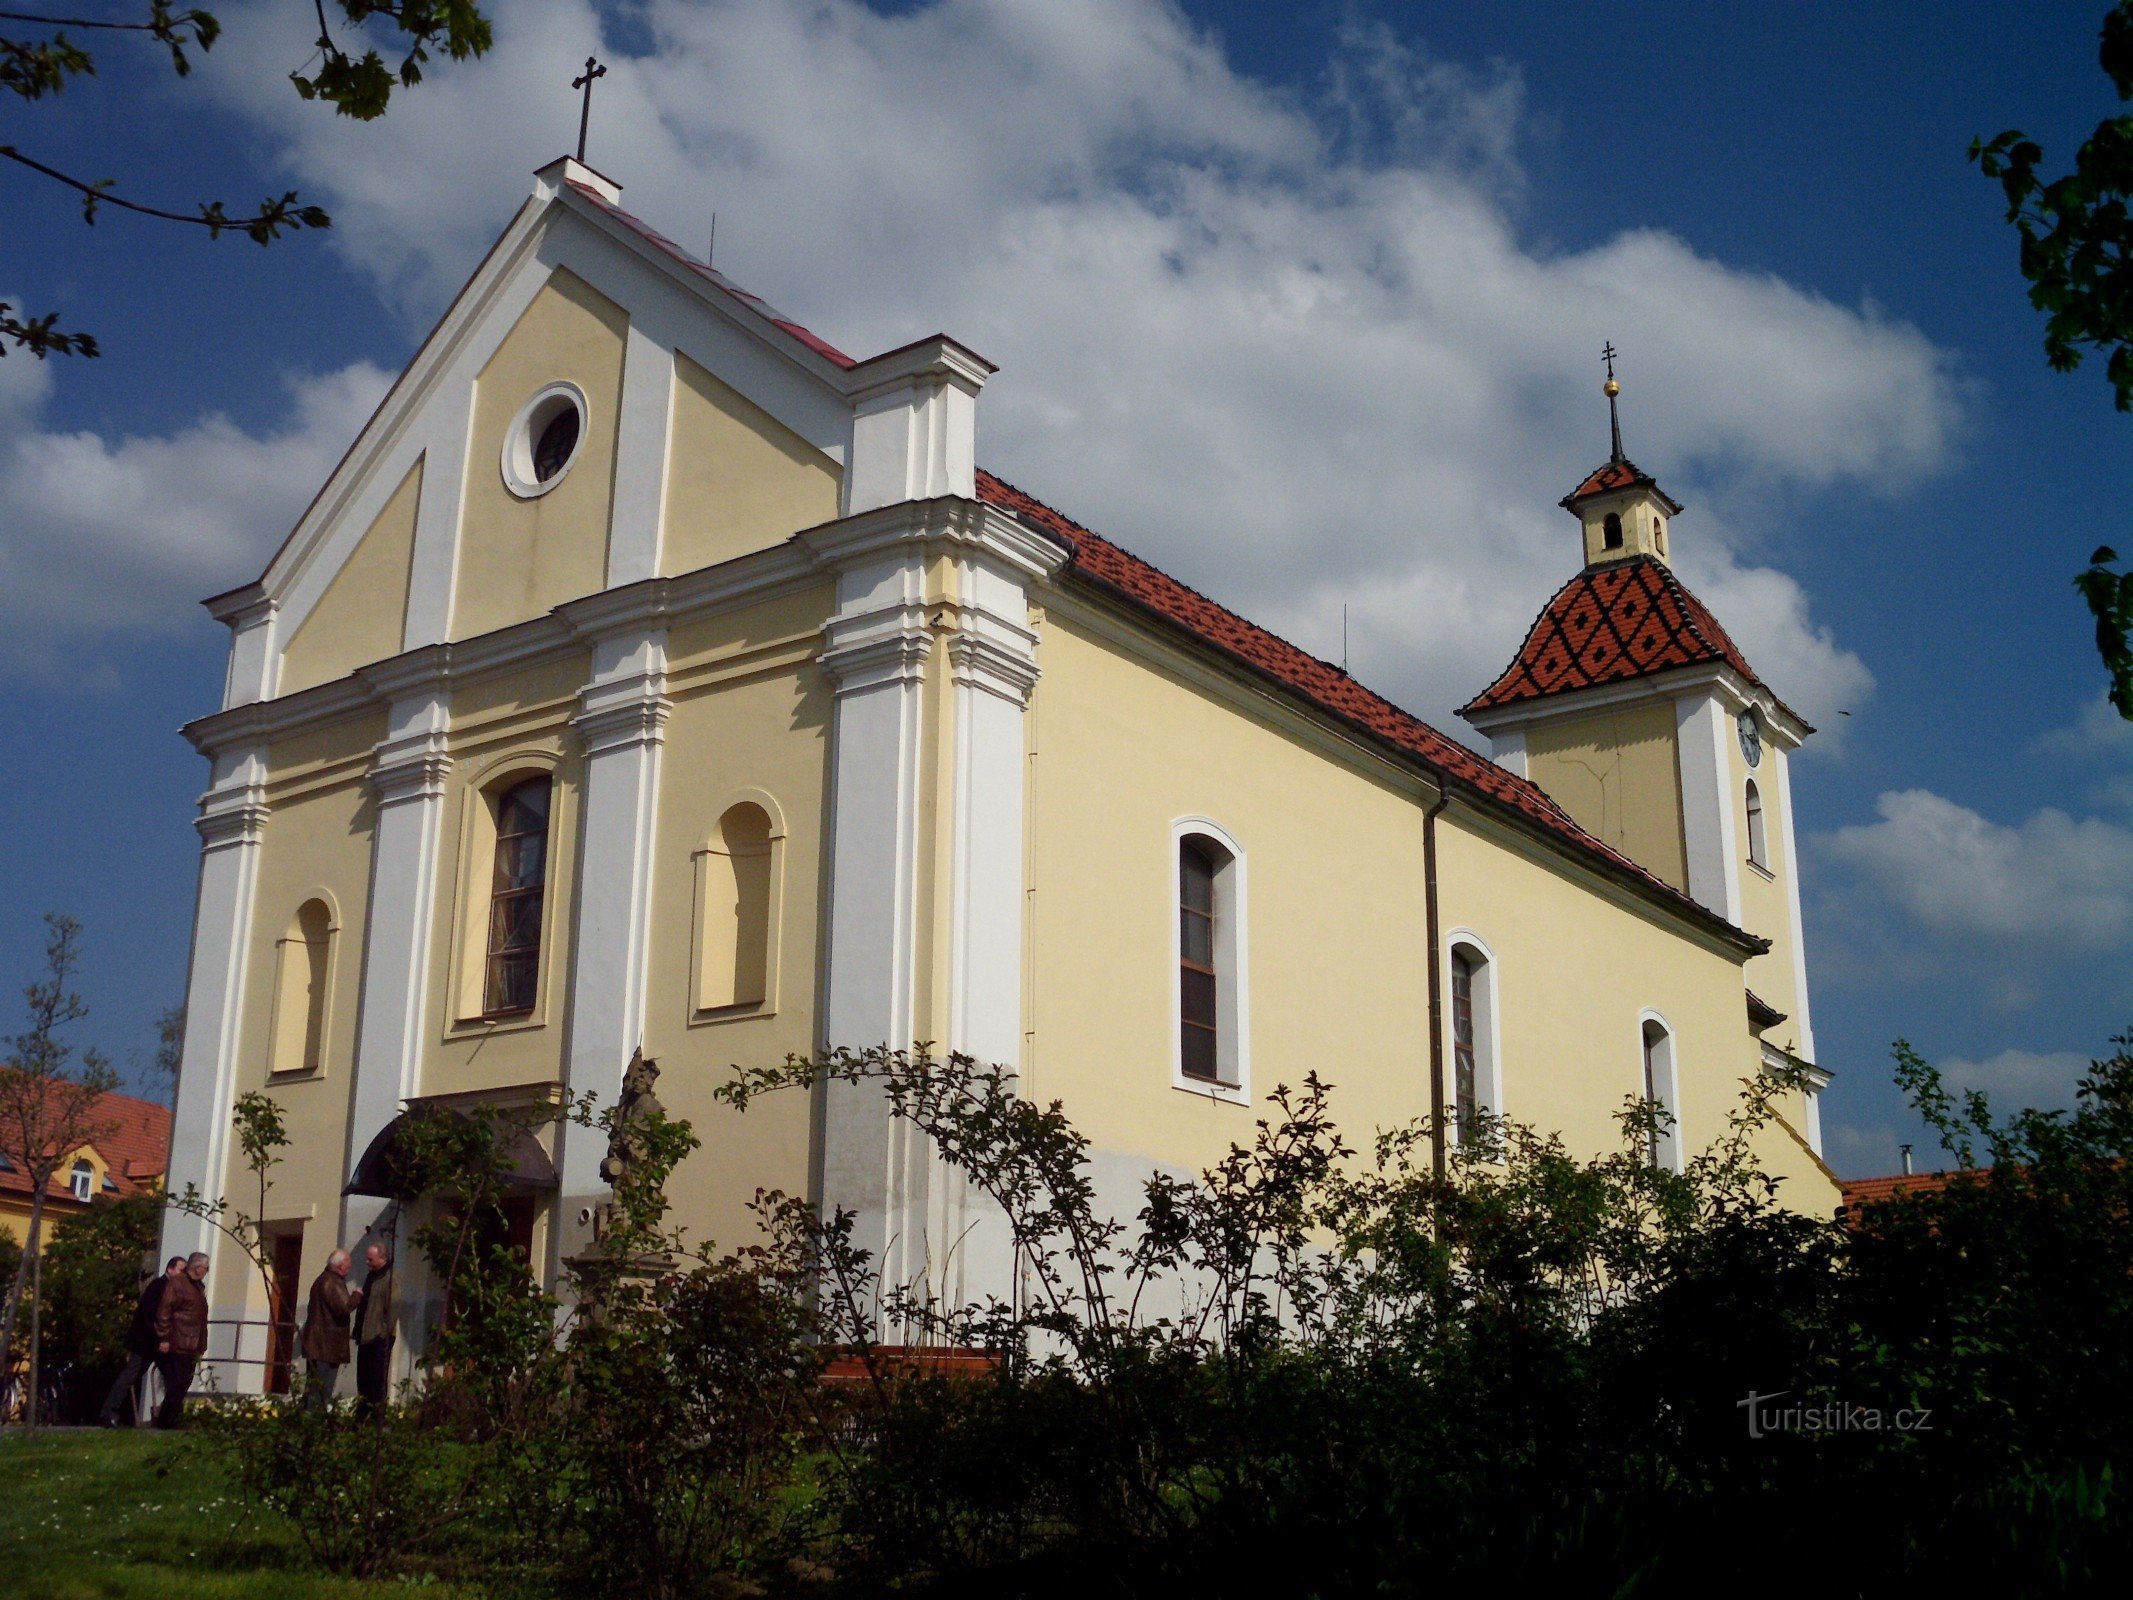 Kunovice (bei U. Hradiště) - Kirche St. Peter und Paul